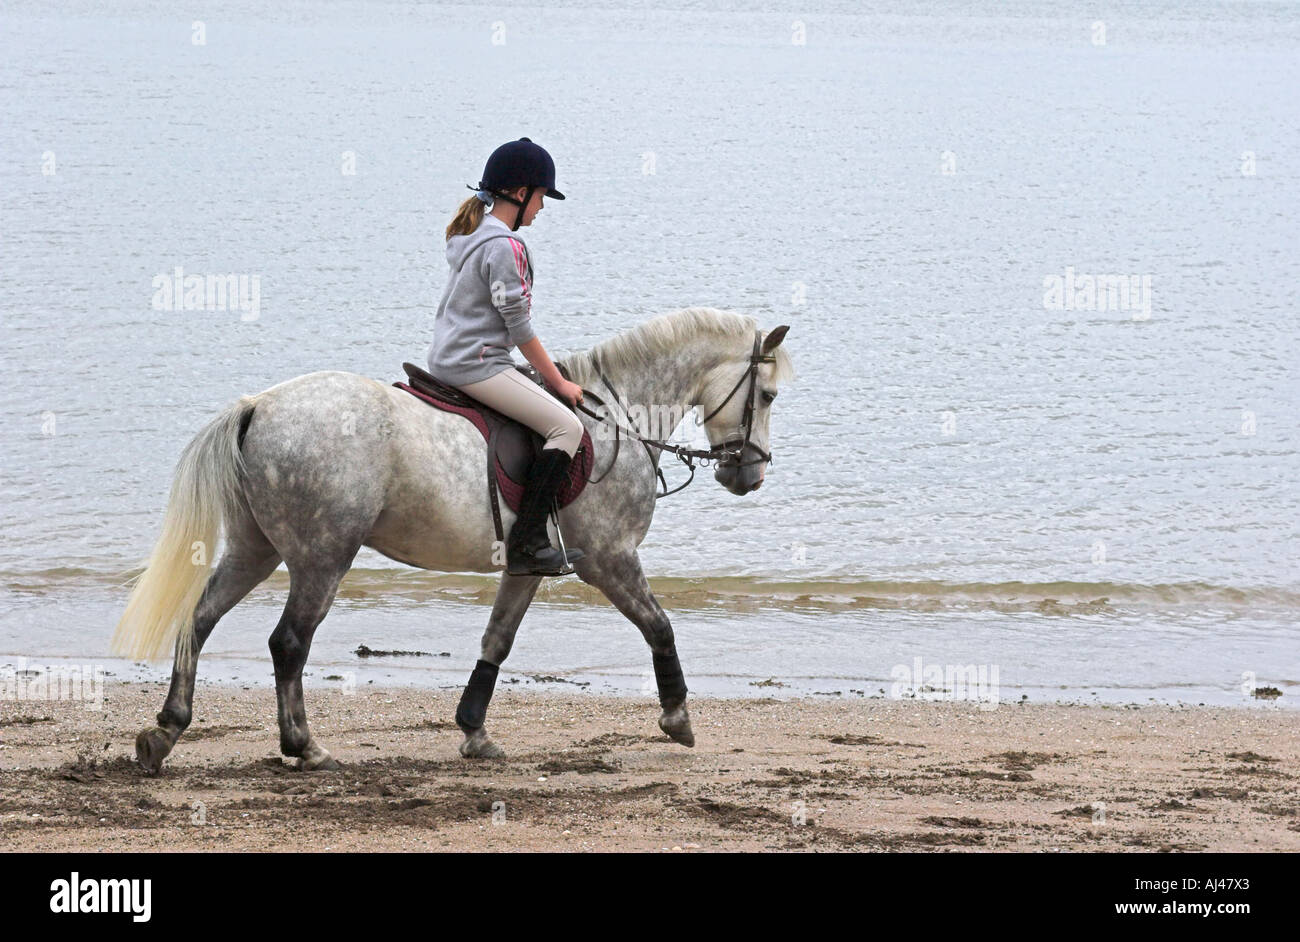 Girl riding horse at seaside Stock Photo